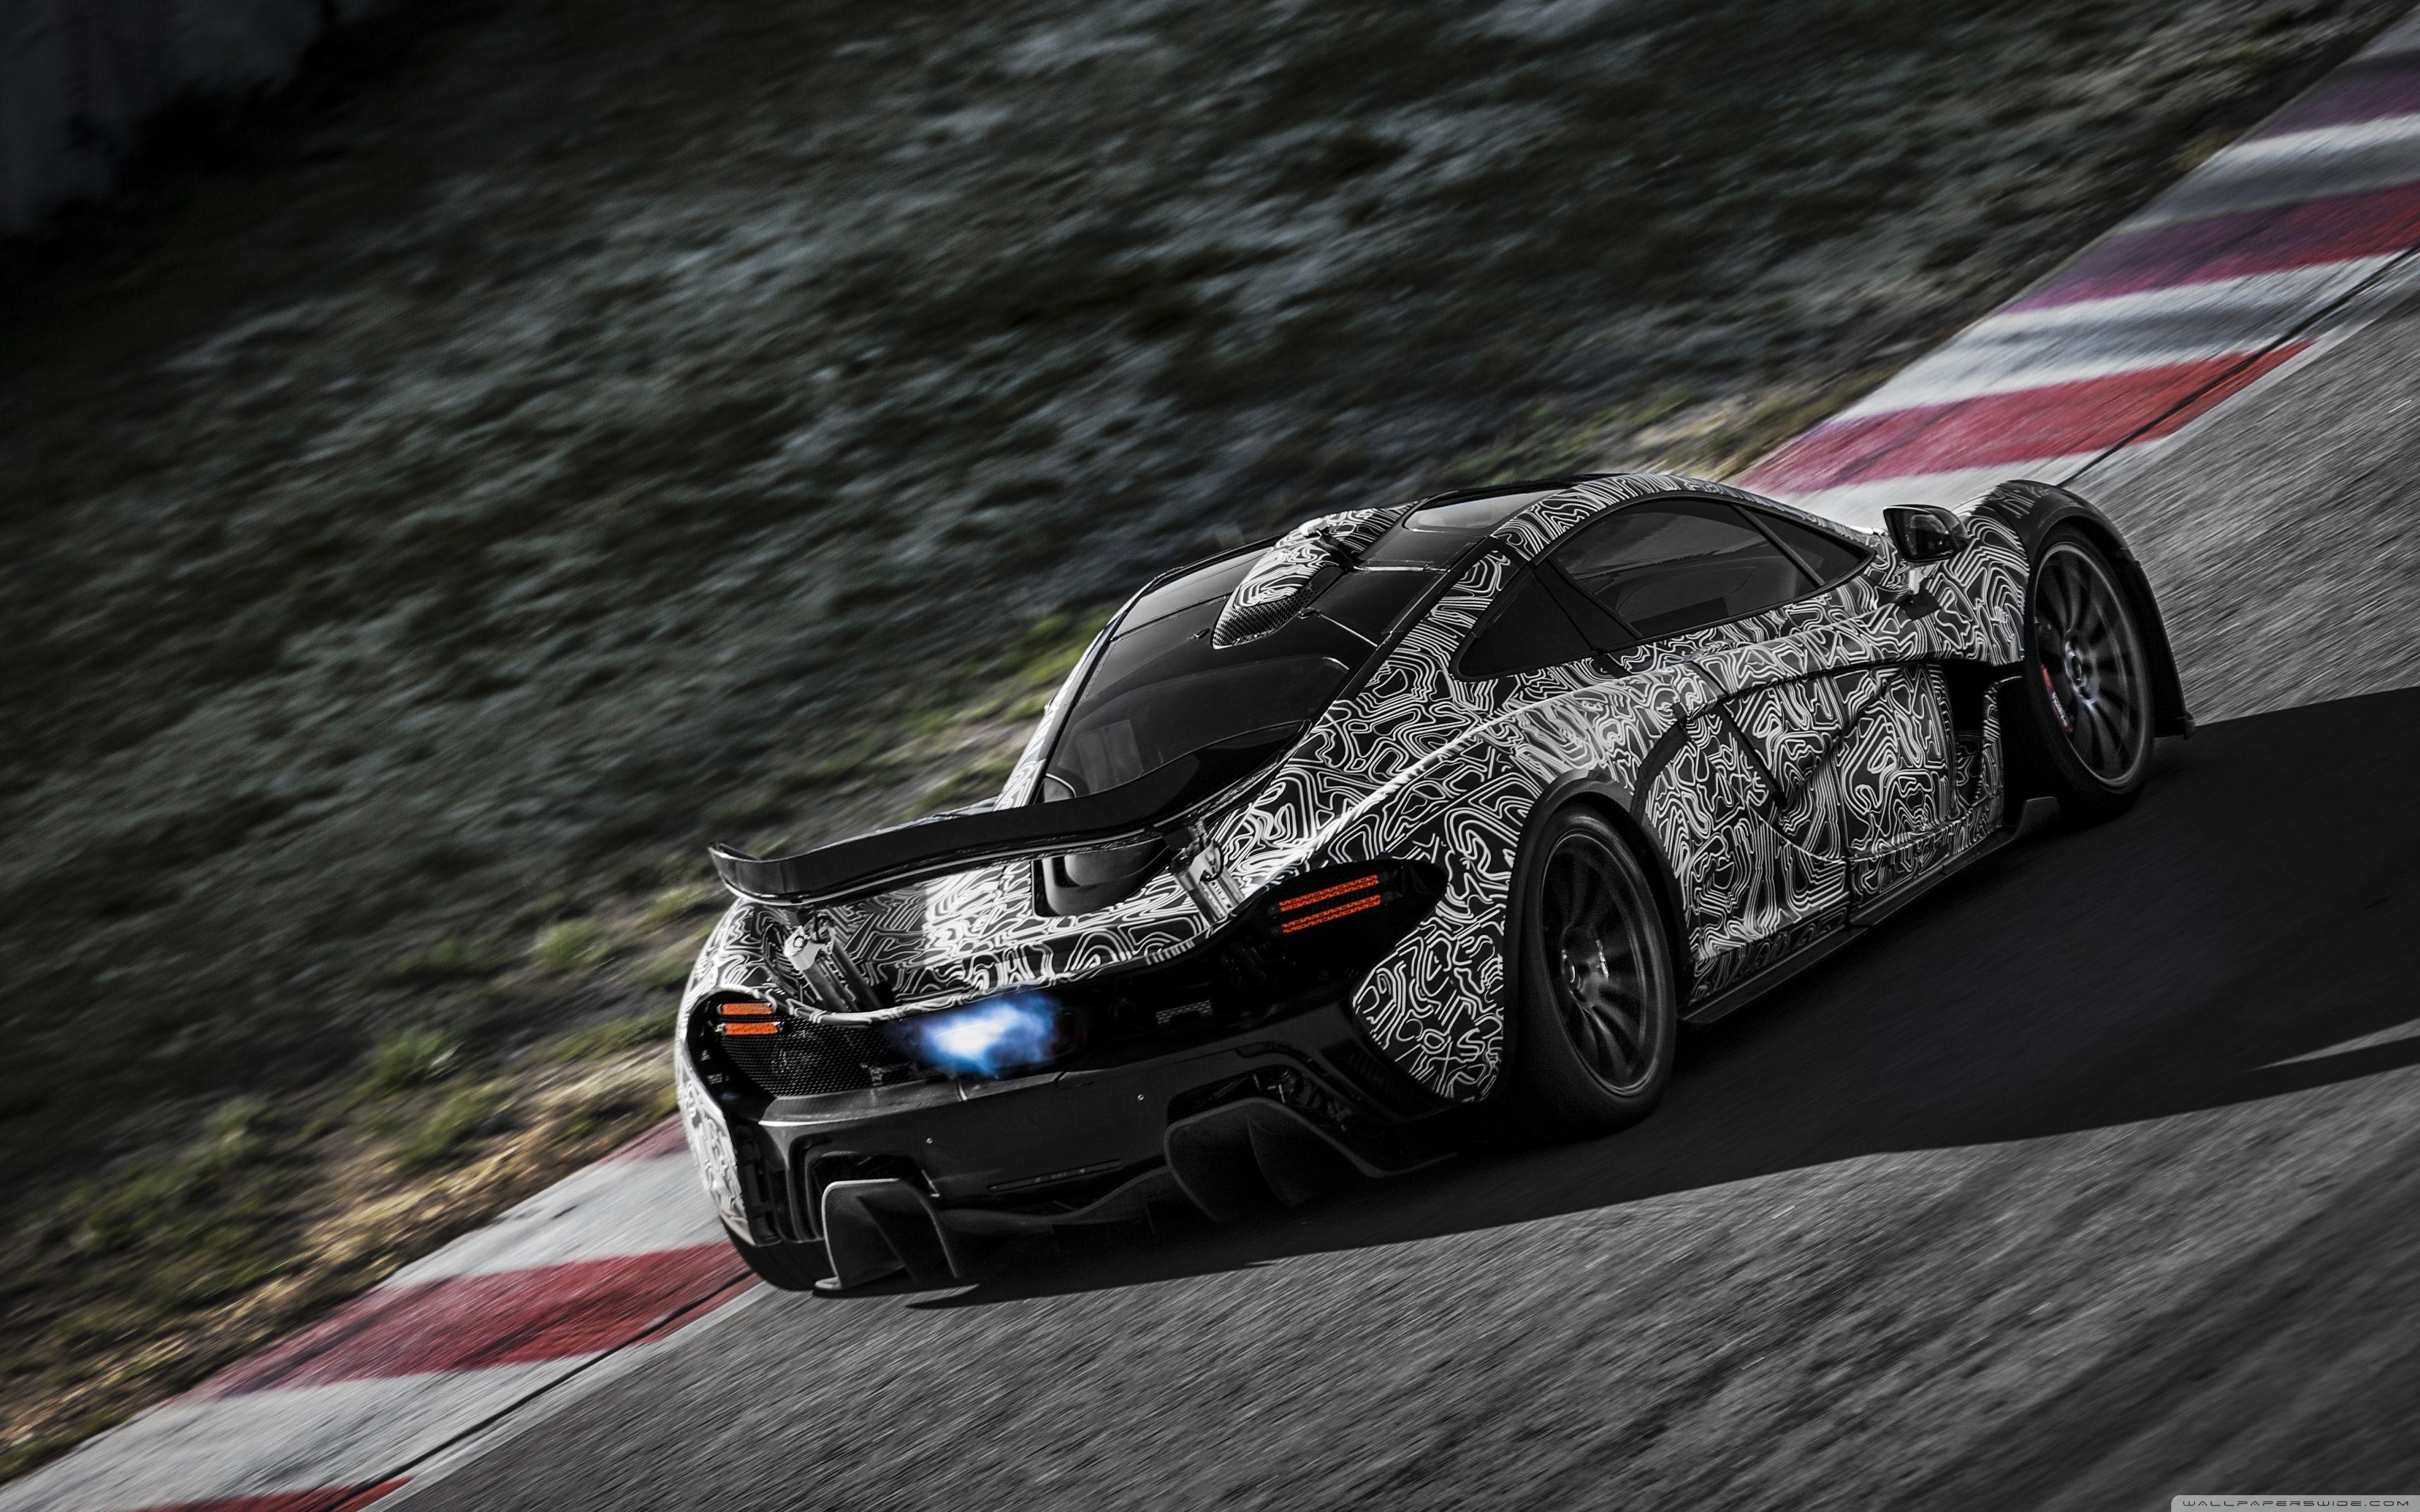 McLaren P1 Car Race ❤ 4K HD Desktop Wallpaper for 4K Ultra HD TV